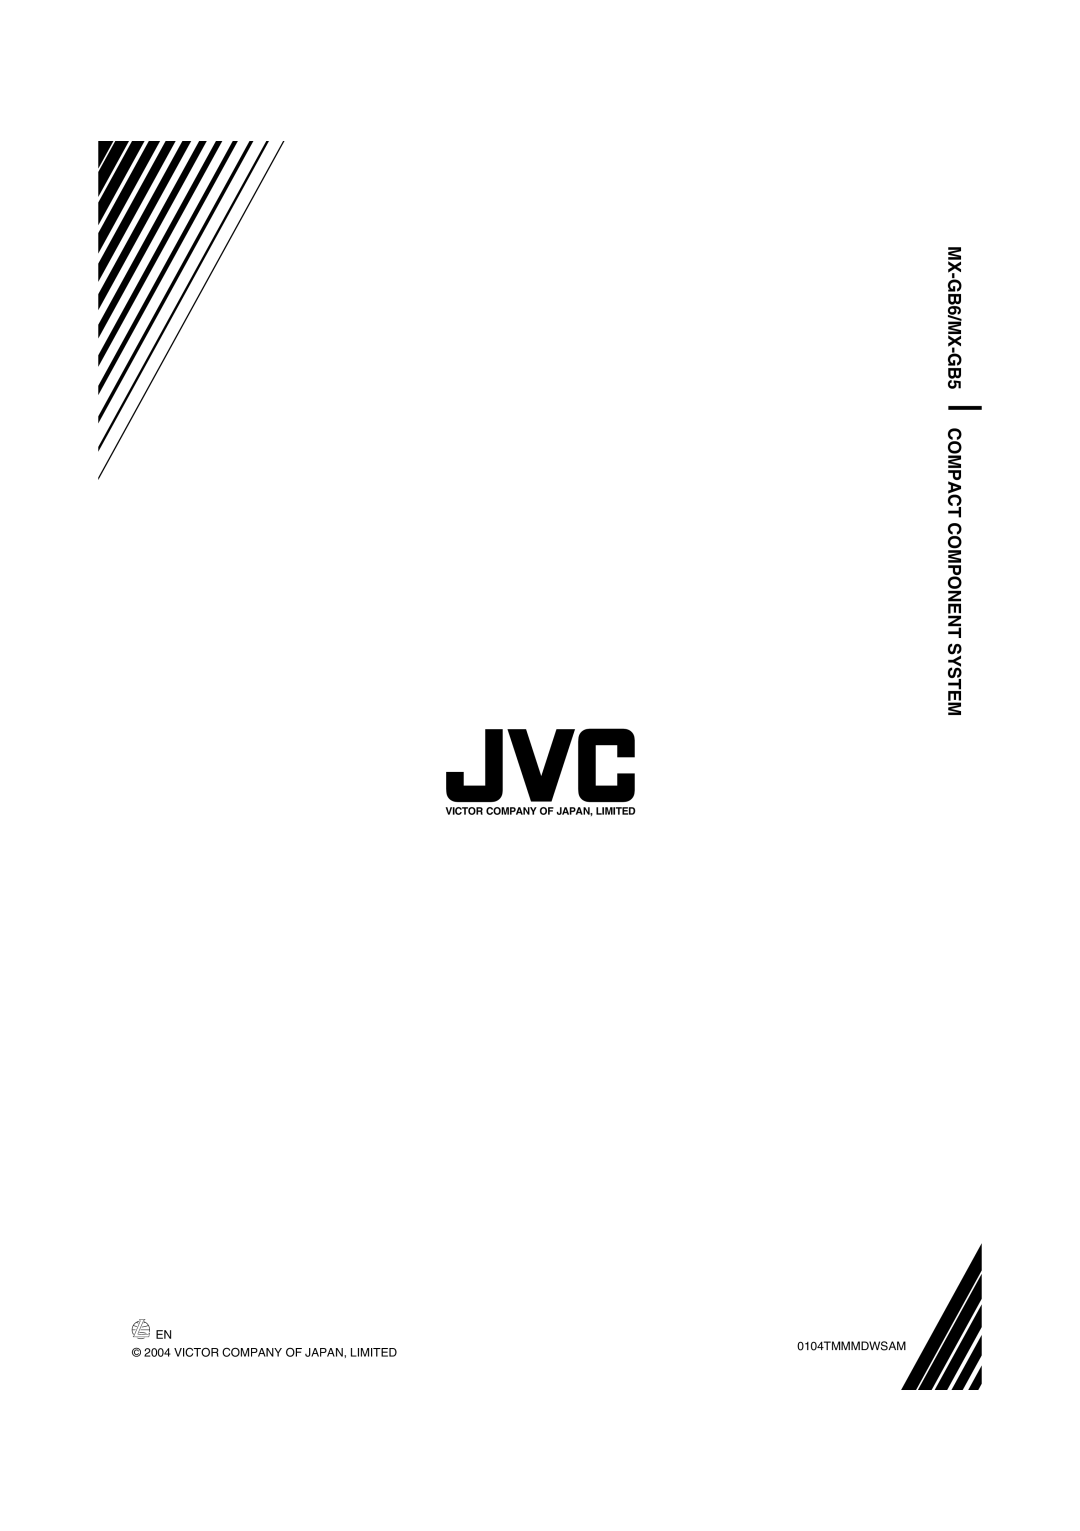 JVC manual MX-GB6/MX-GB5COMPACT COMPONENT SYSTEM, 0104TMMMDWSAM, Victor Company Of Japan, Limited 